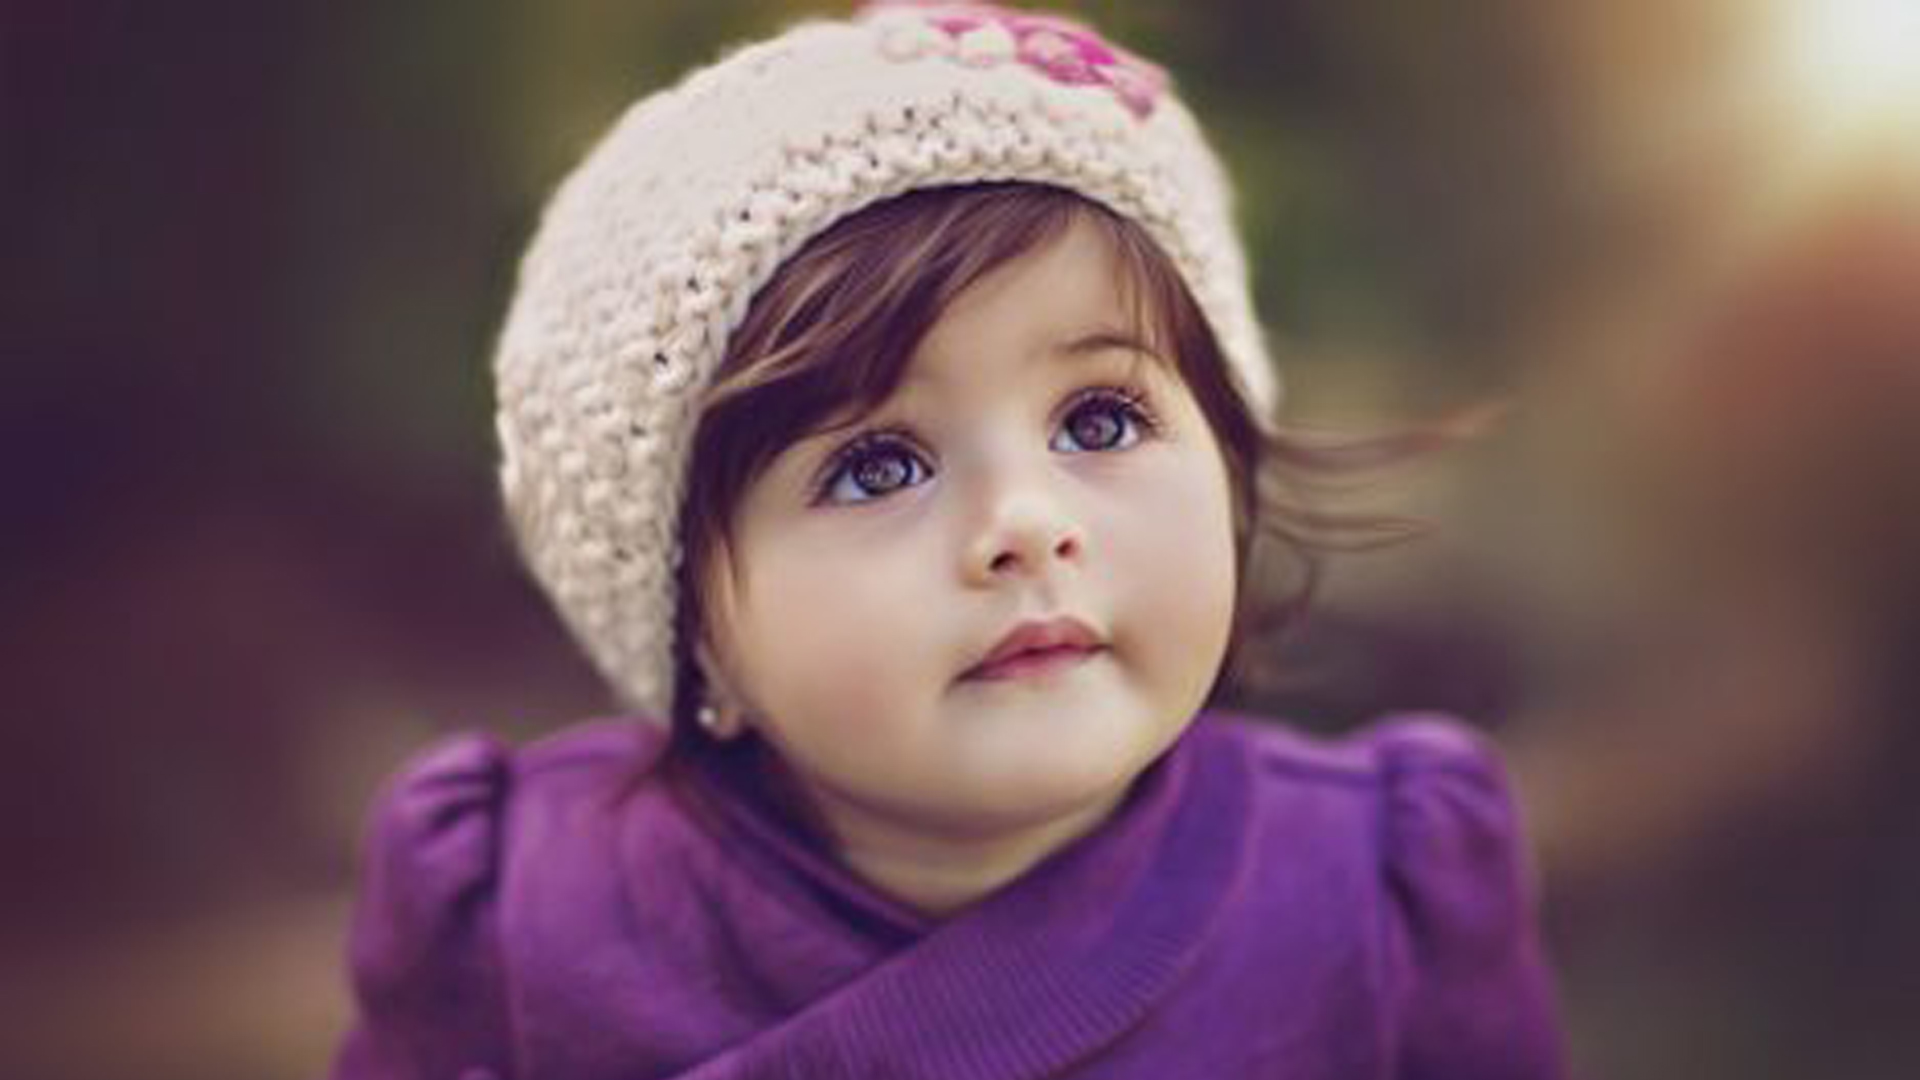 very cute baby girl image